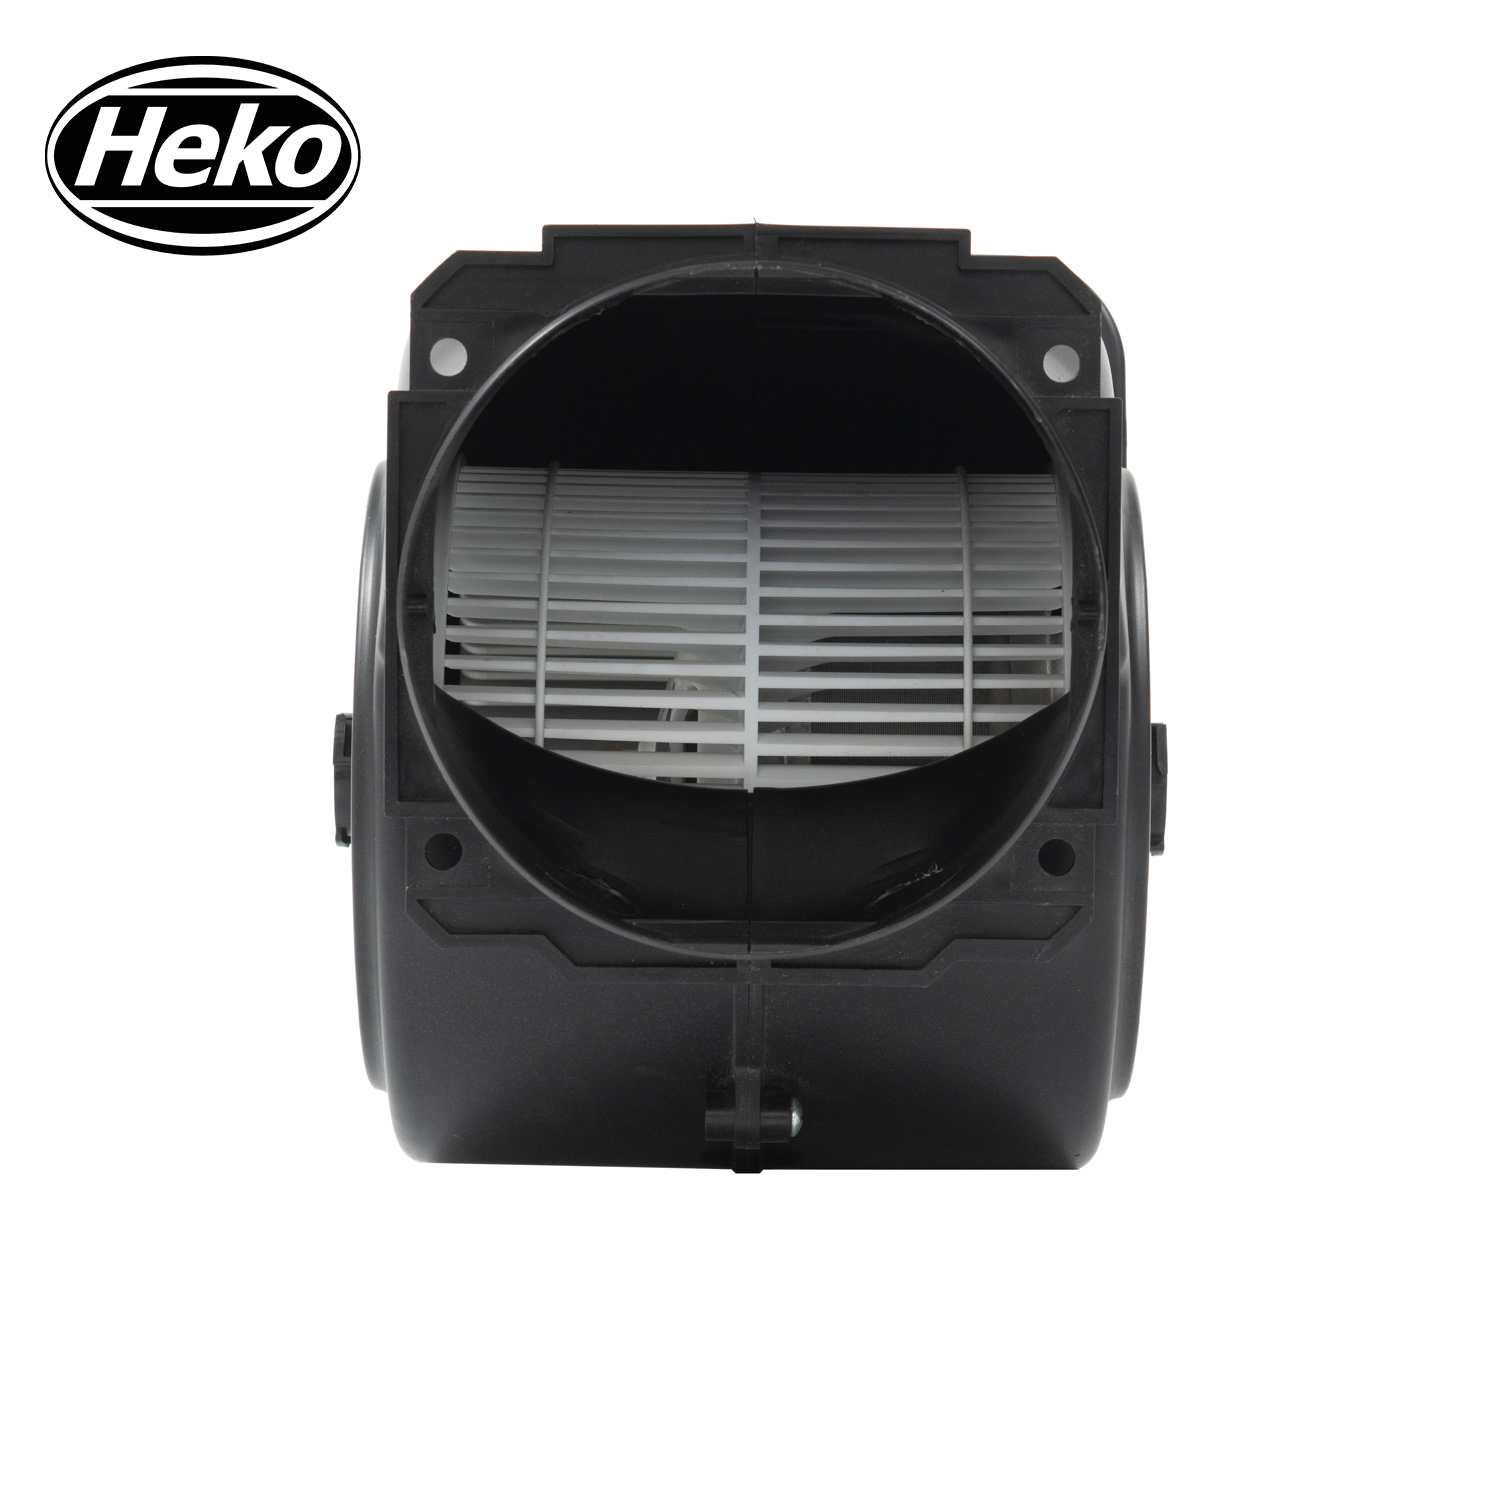 HEKO DC150mm High Speed Industrial Radial Centrifugal Blower Fan